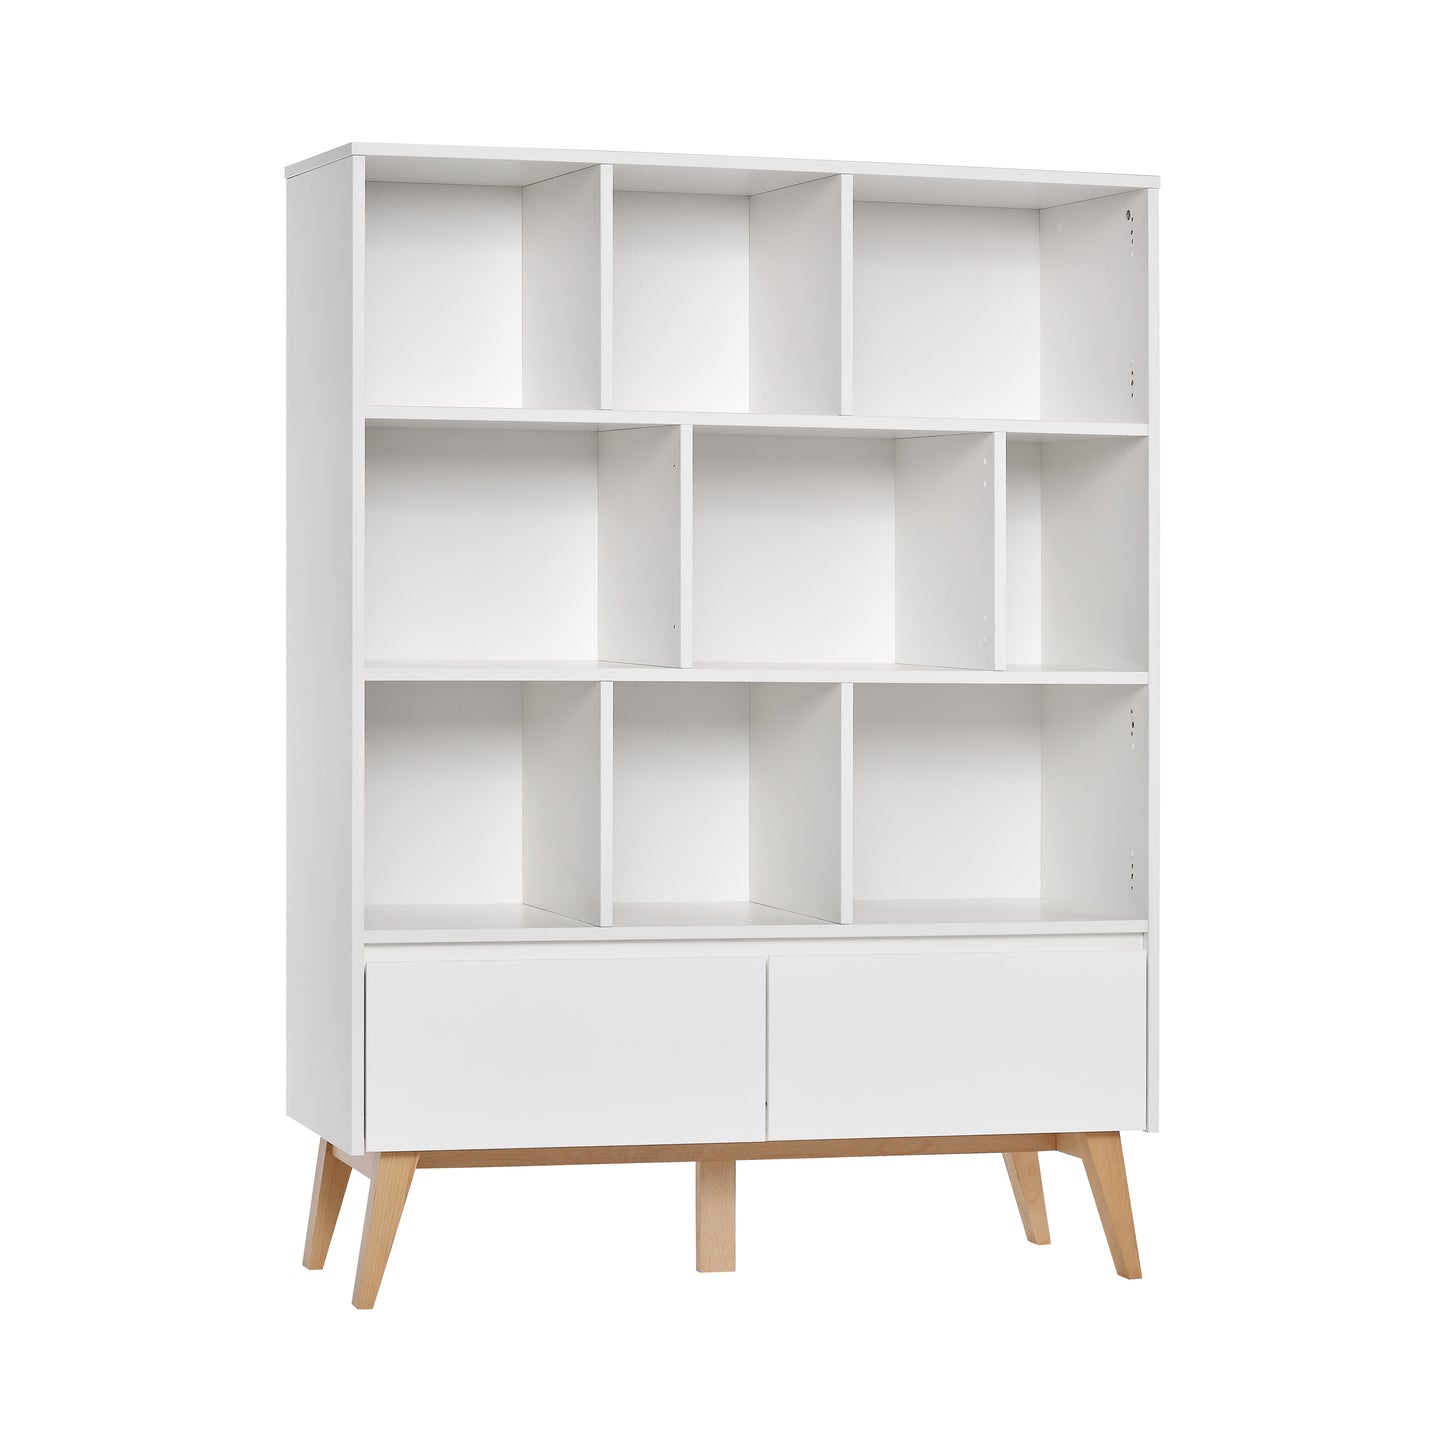 Pinio, Swing Bookshelf 120 cm, White